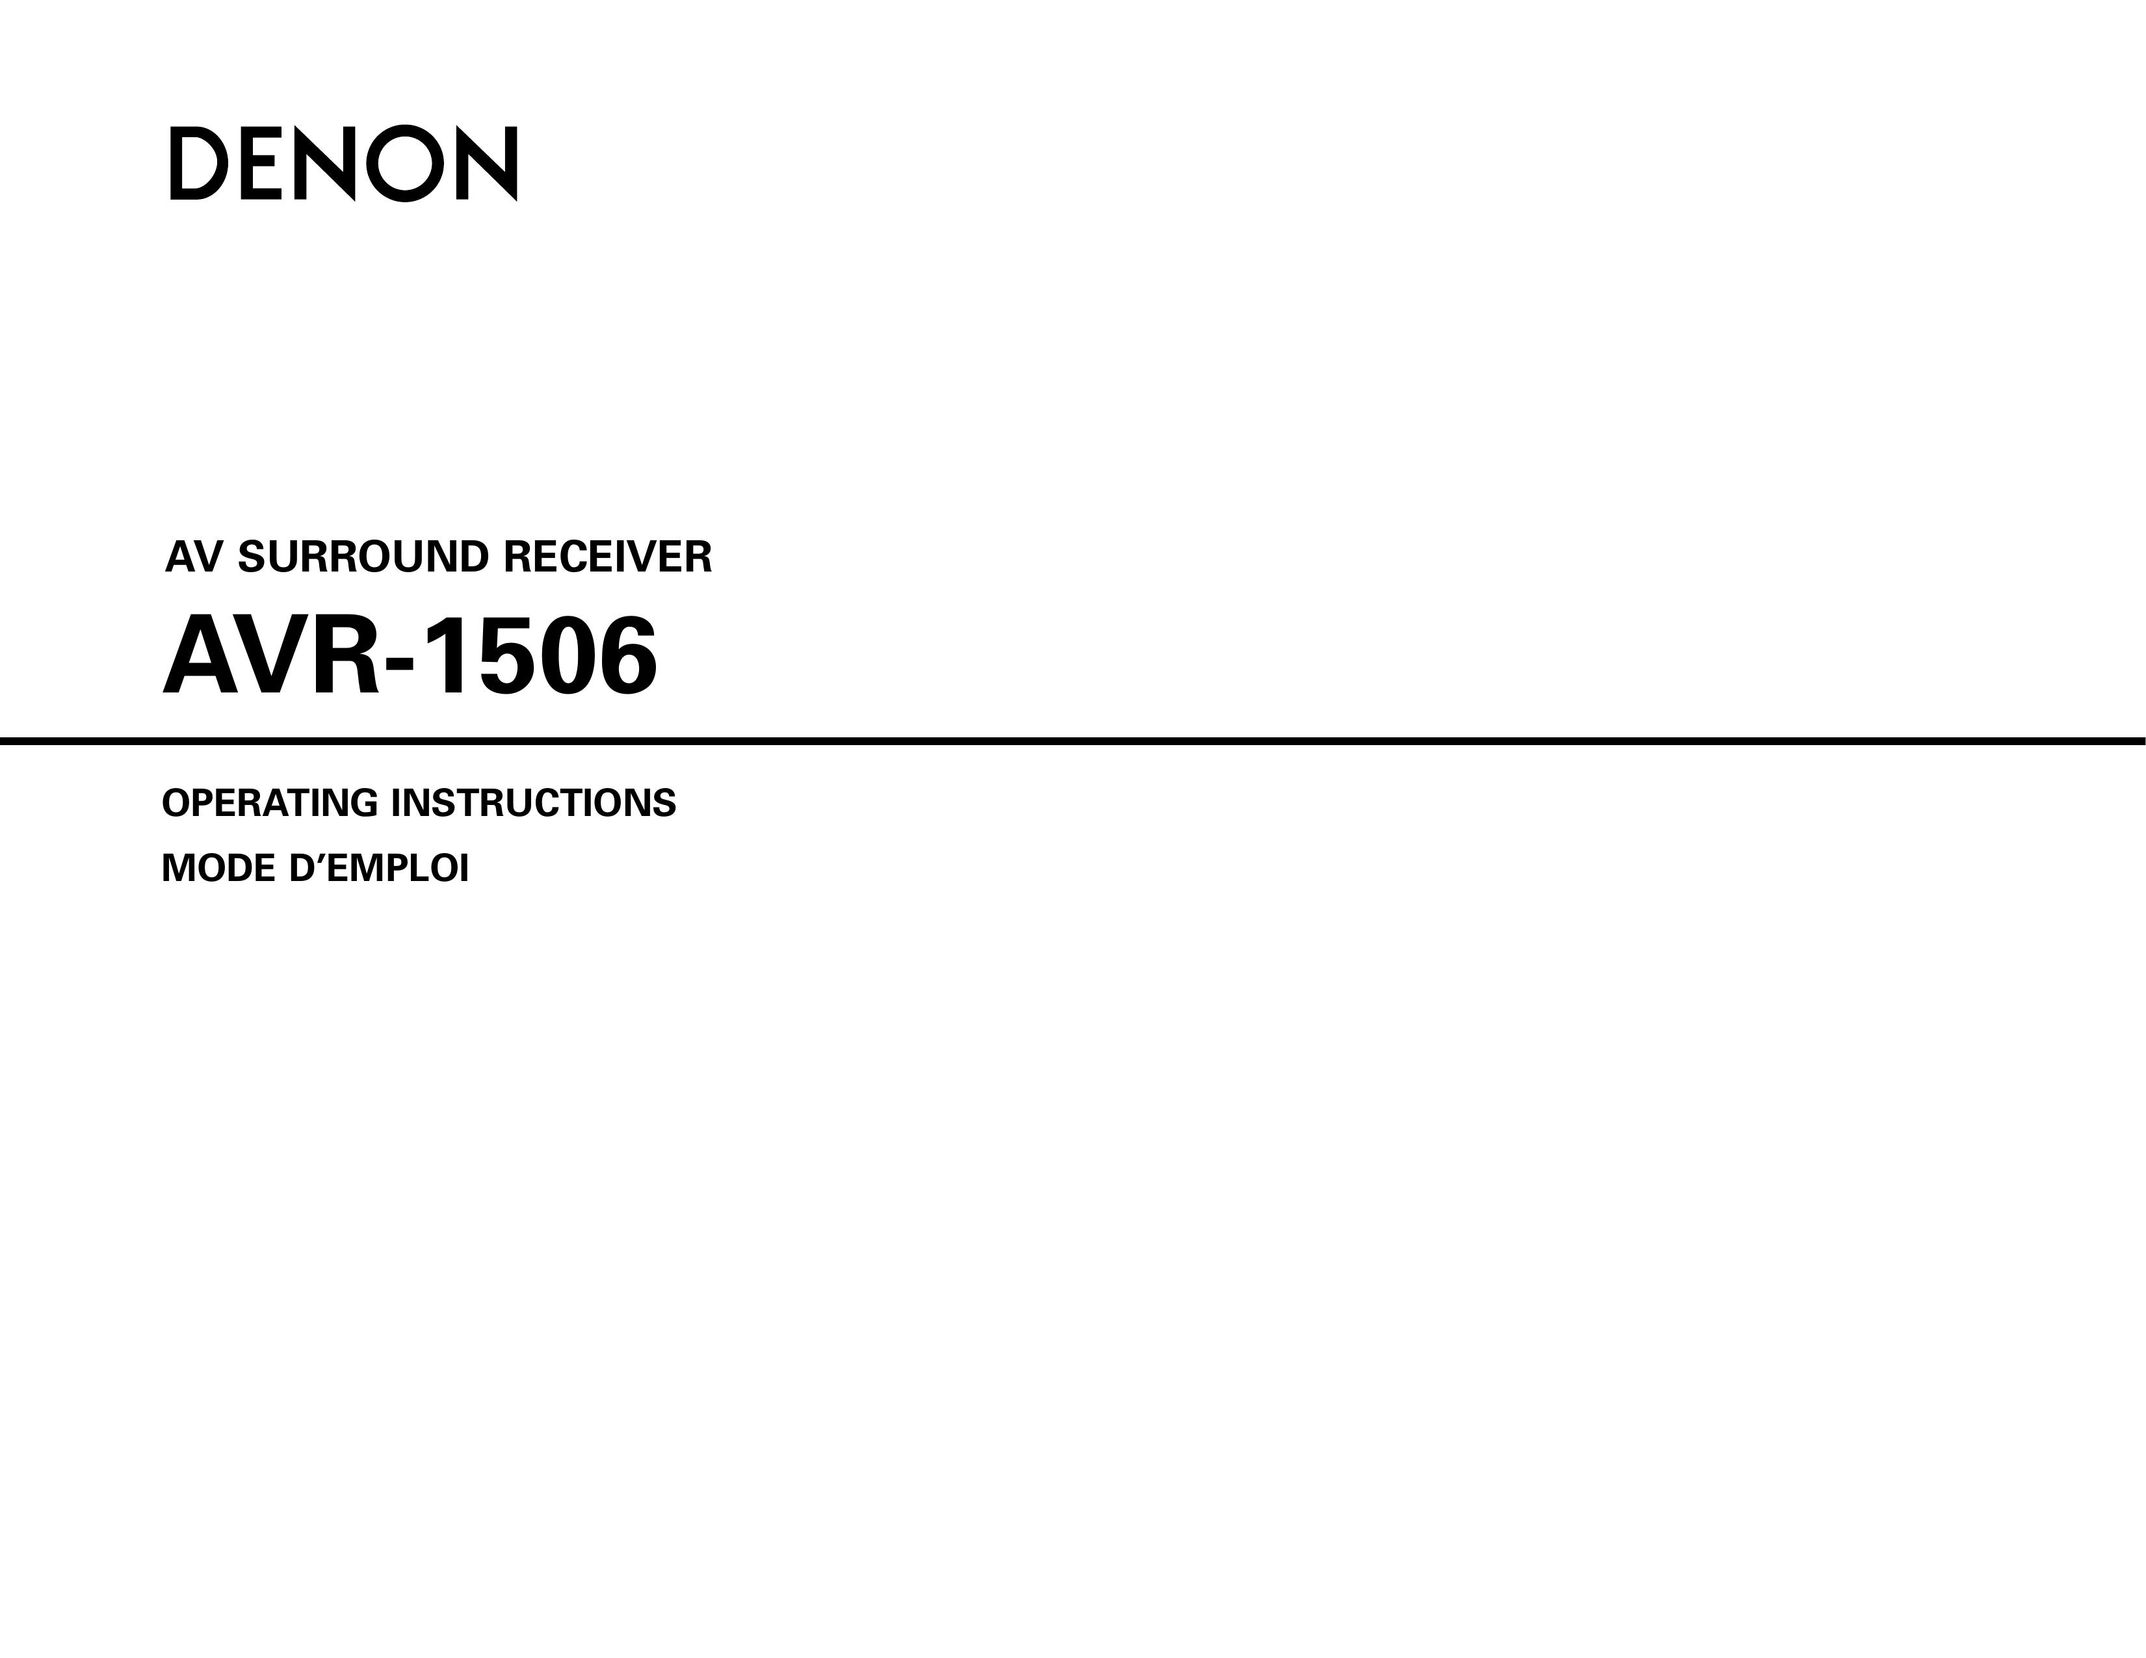 Denon AVR-1506 Stereo System User Manual